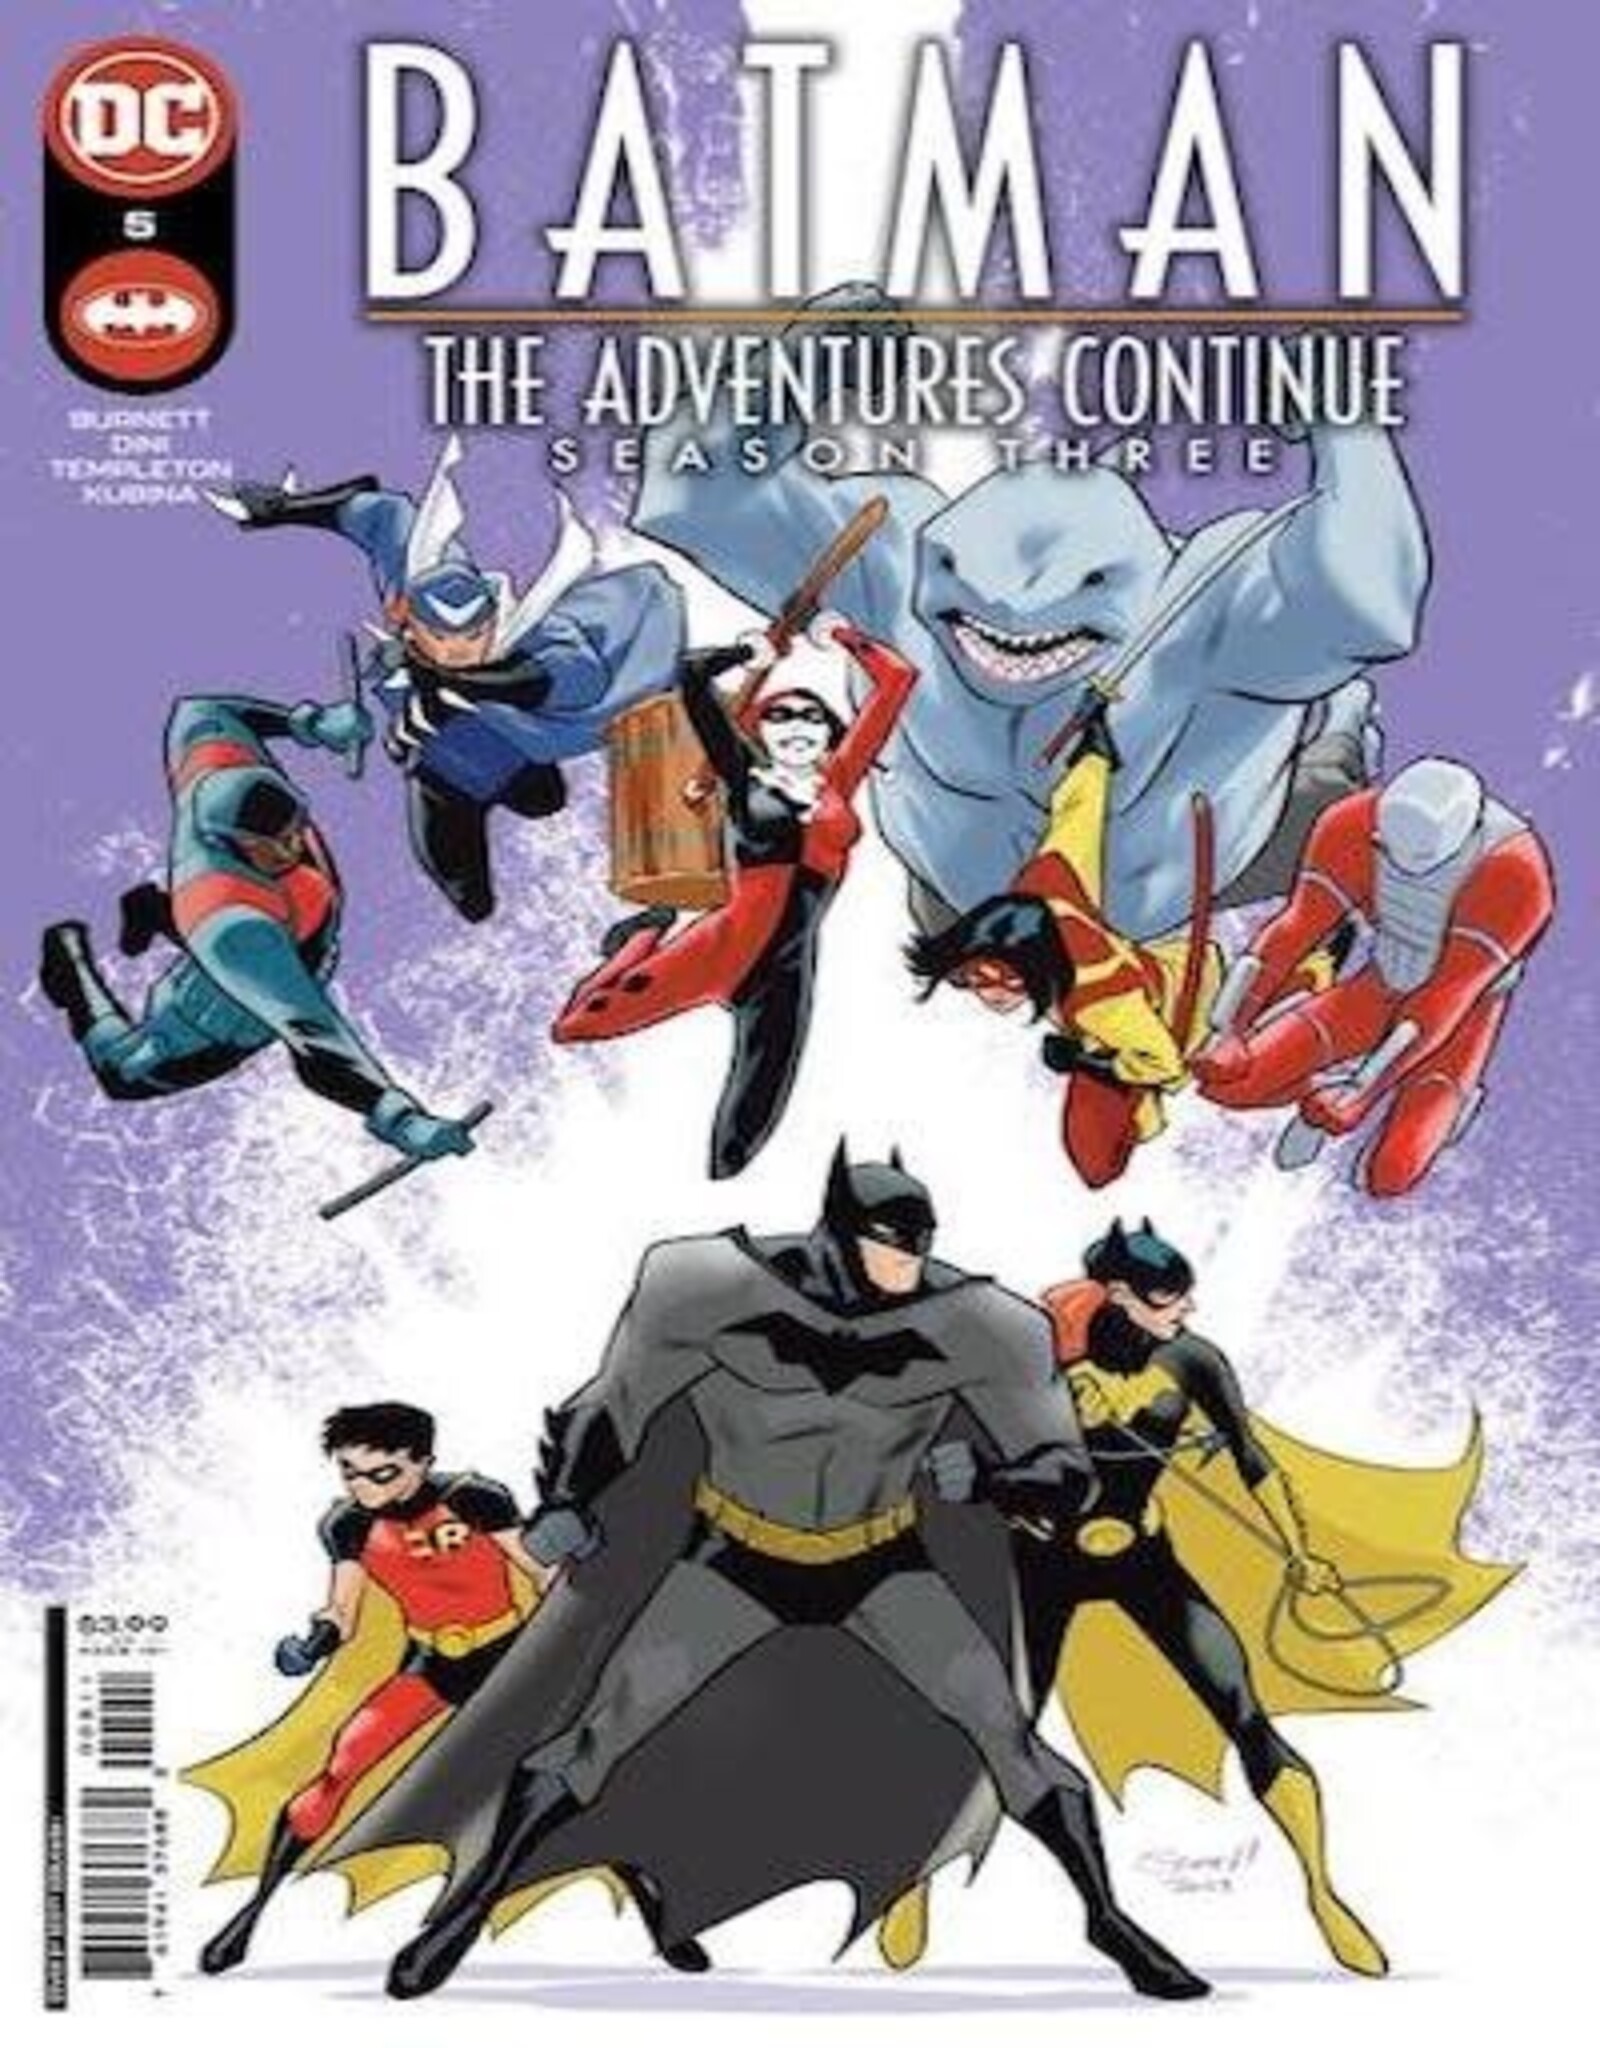 DC Comics Batman The Adventures Continue Season Three #5 Cvr A Scott Godlewski